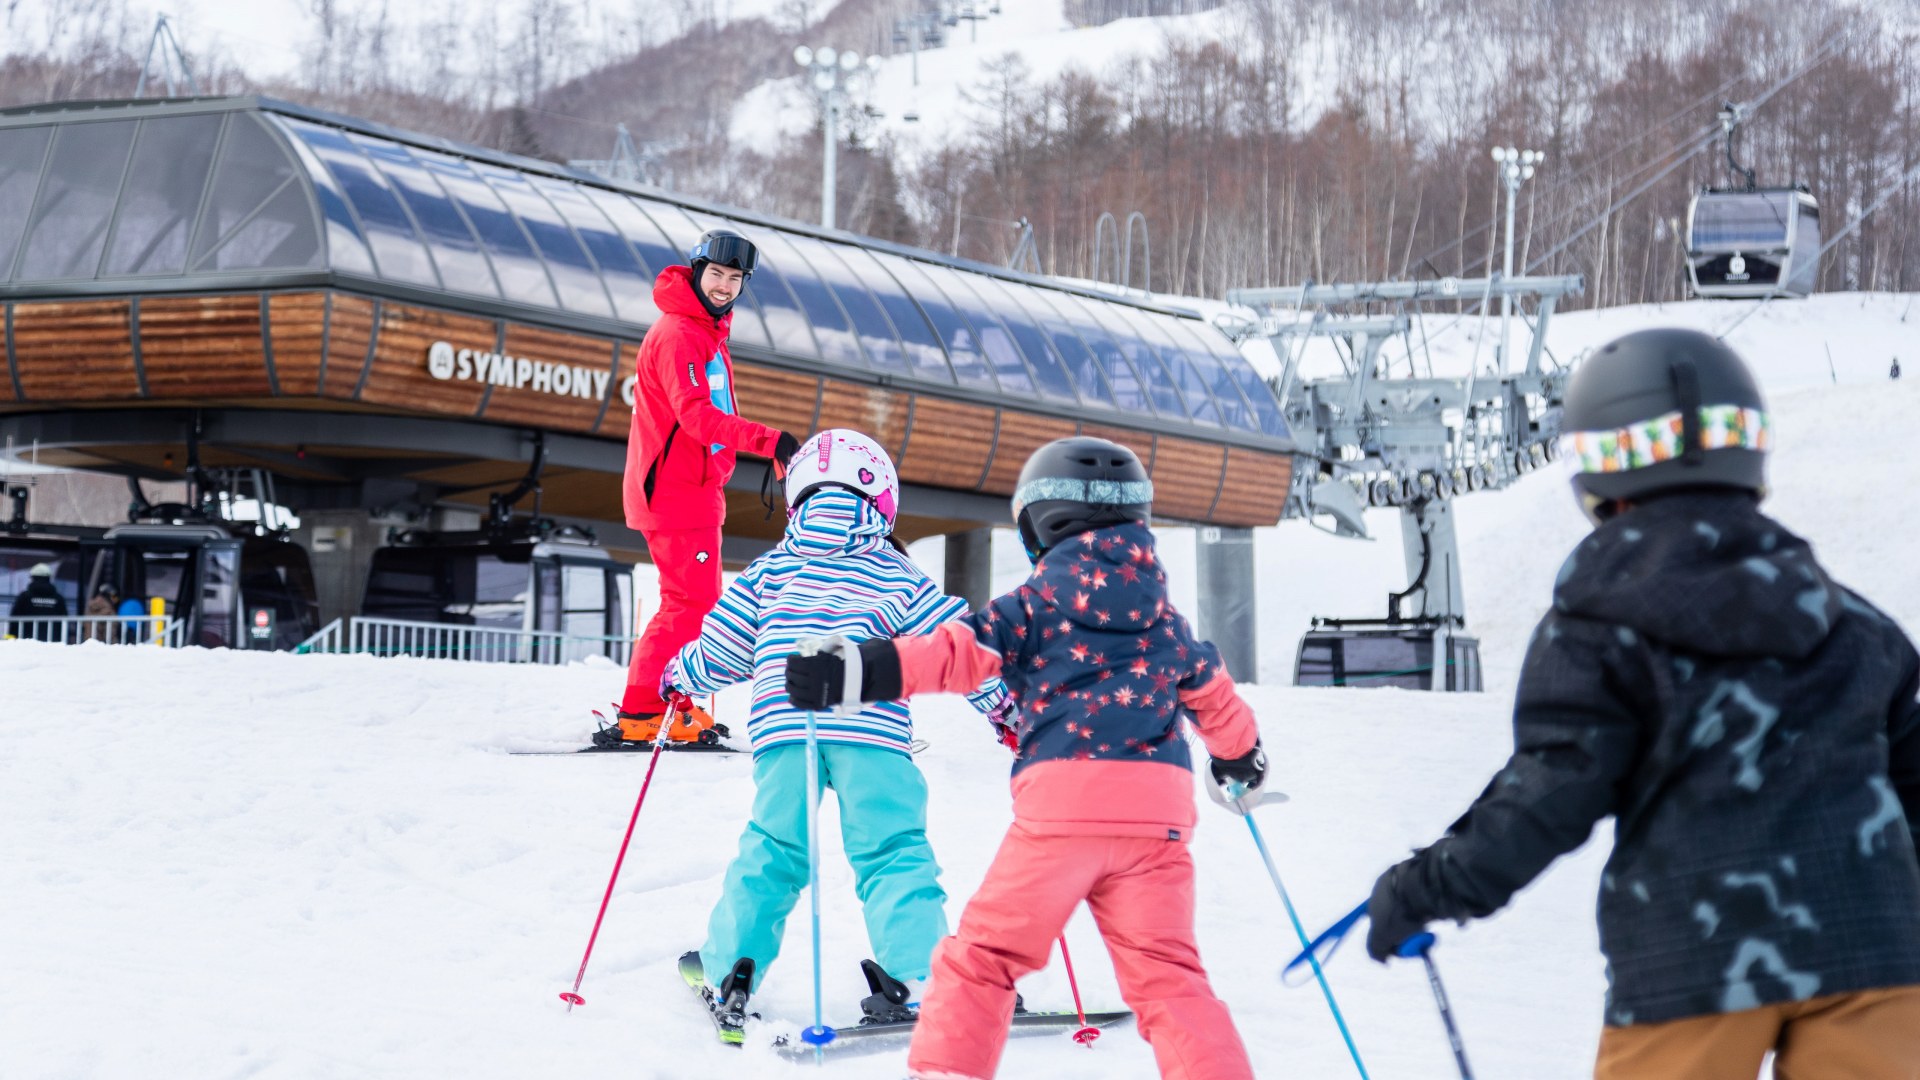 Slide into Skiing Season